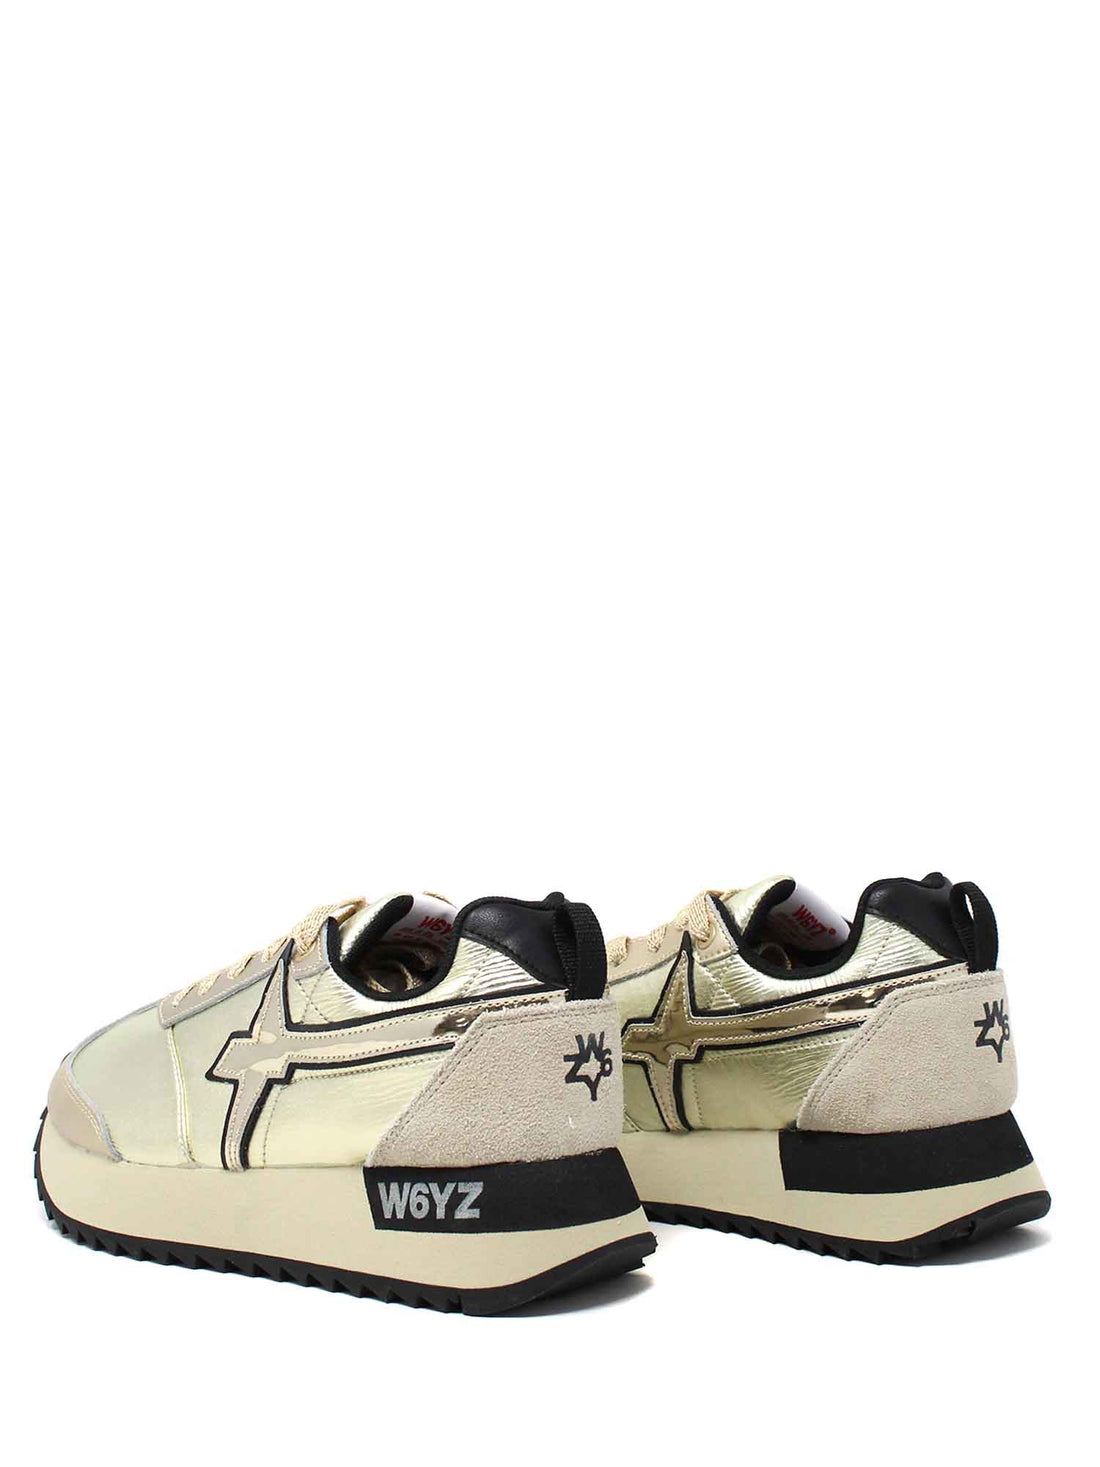 Sneakers Dorato W6yz